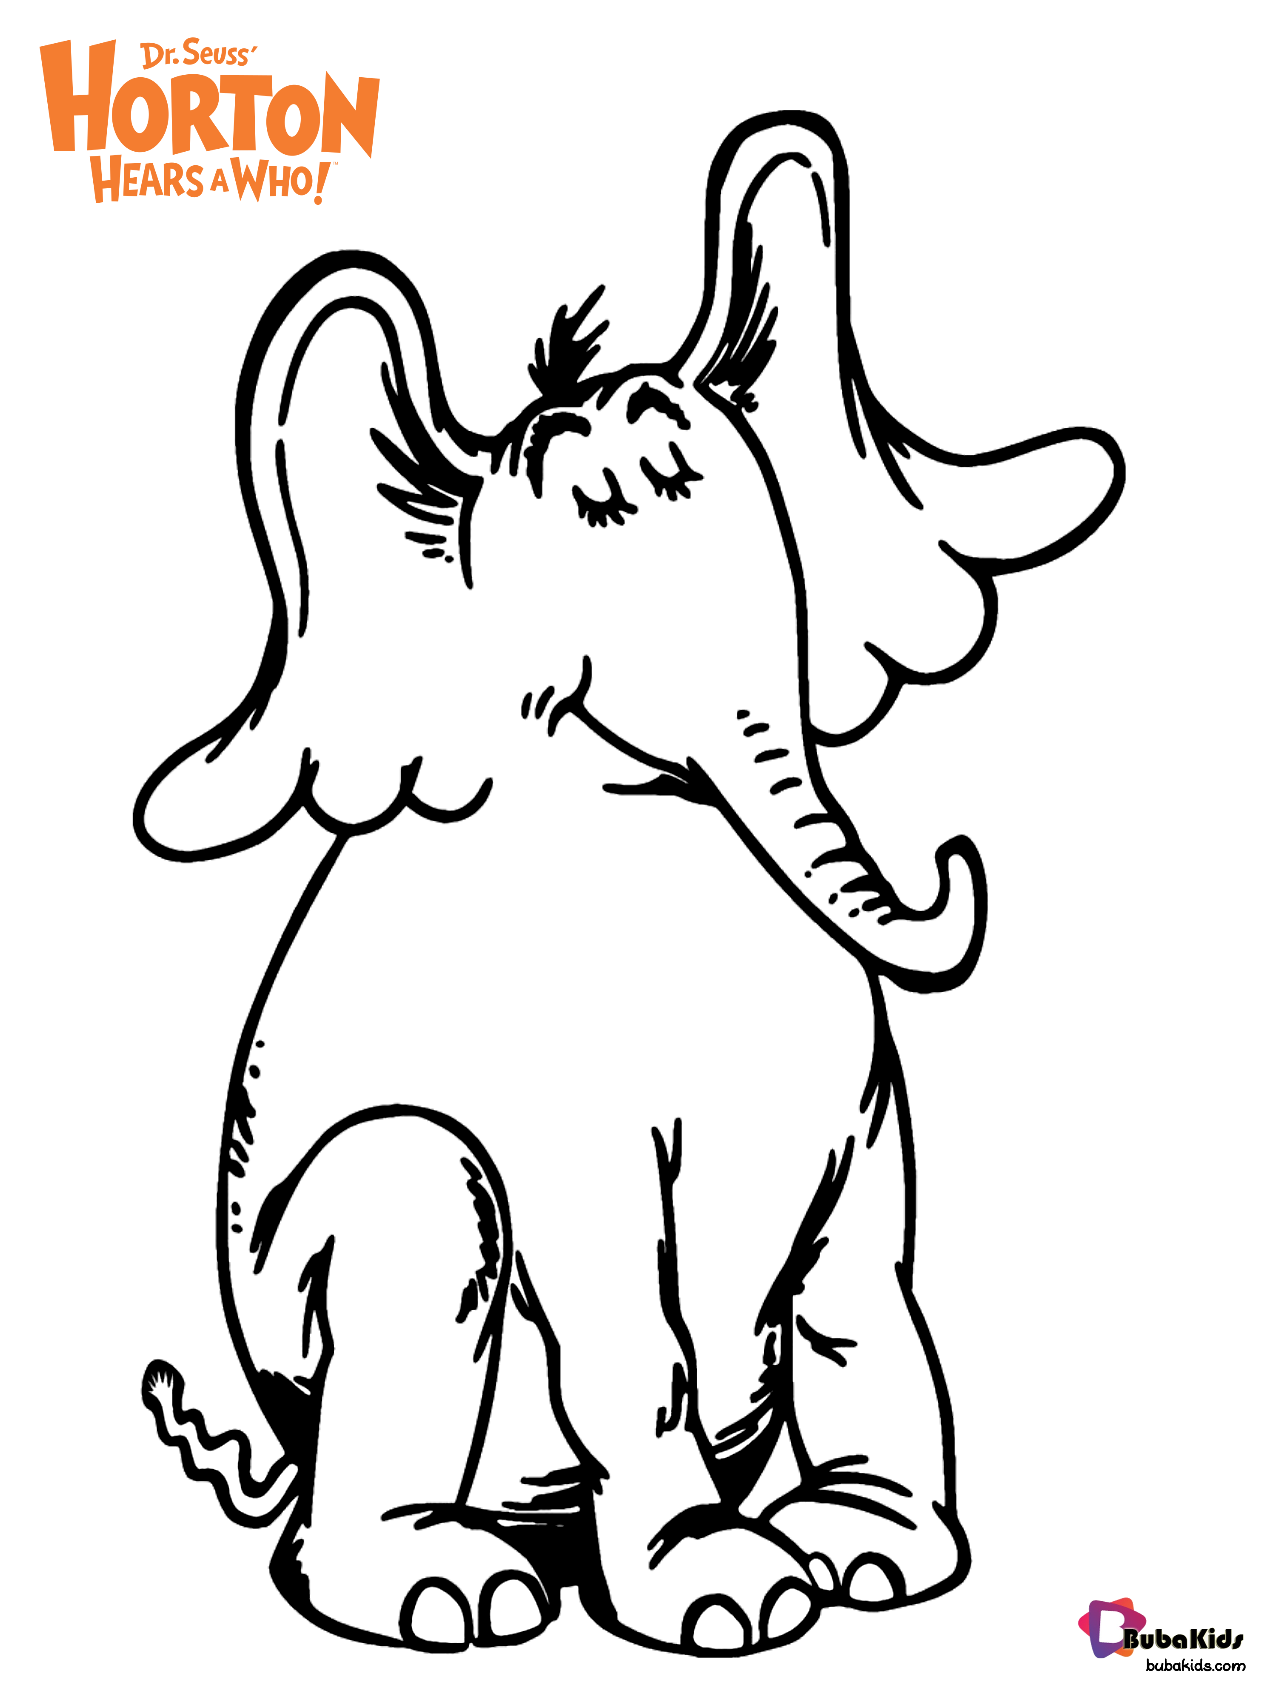 Dr Seuss Horton Hears A Who Horton Elephant Printable Coloring Pages BubaKids Dr Seuss Coloring Sheet Coloring Pages Animal Coloring Pages